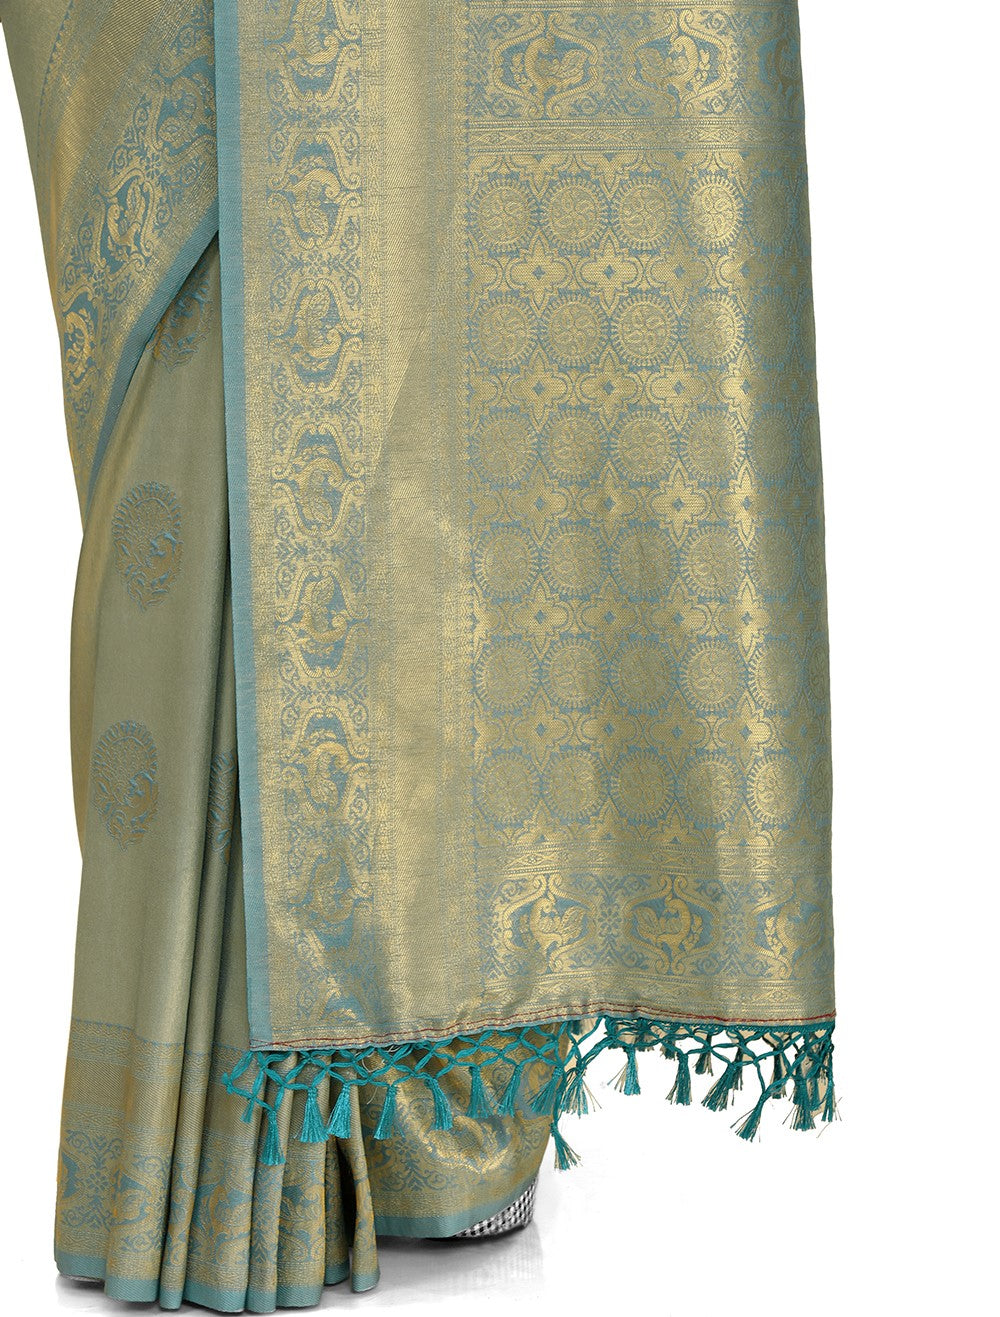 kanjivaram silk saree At Affordable price